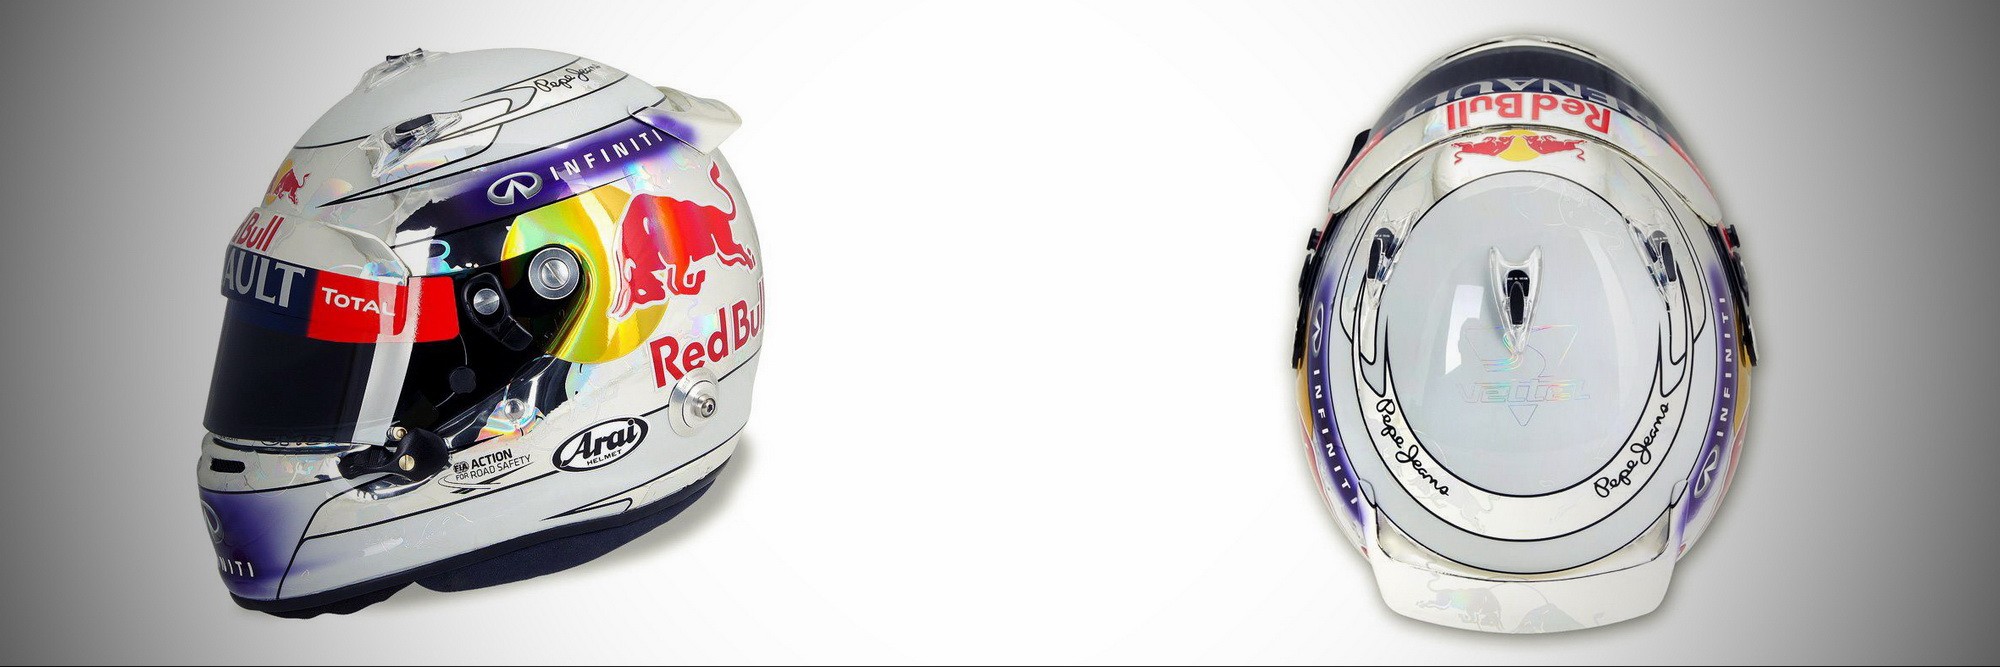 Шлем Себастьяна Феттеля на сезон 2013 года | 2013 helmet of Sebastian Vettel